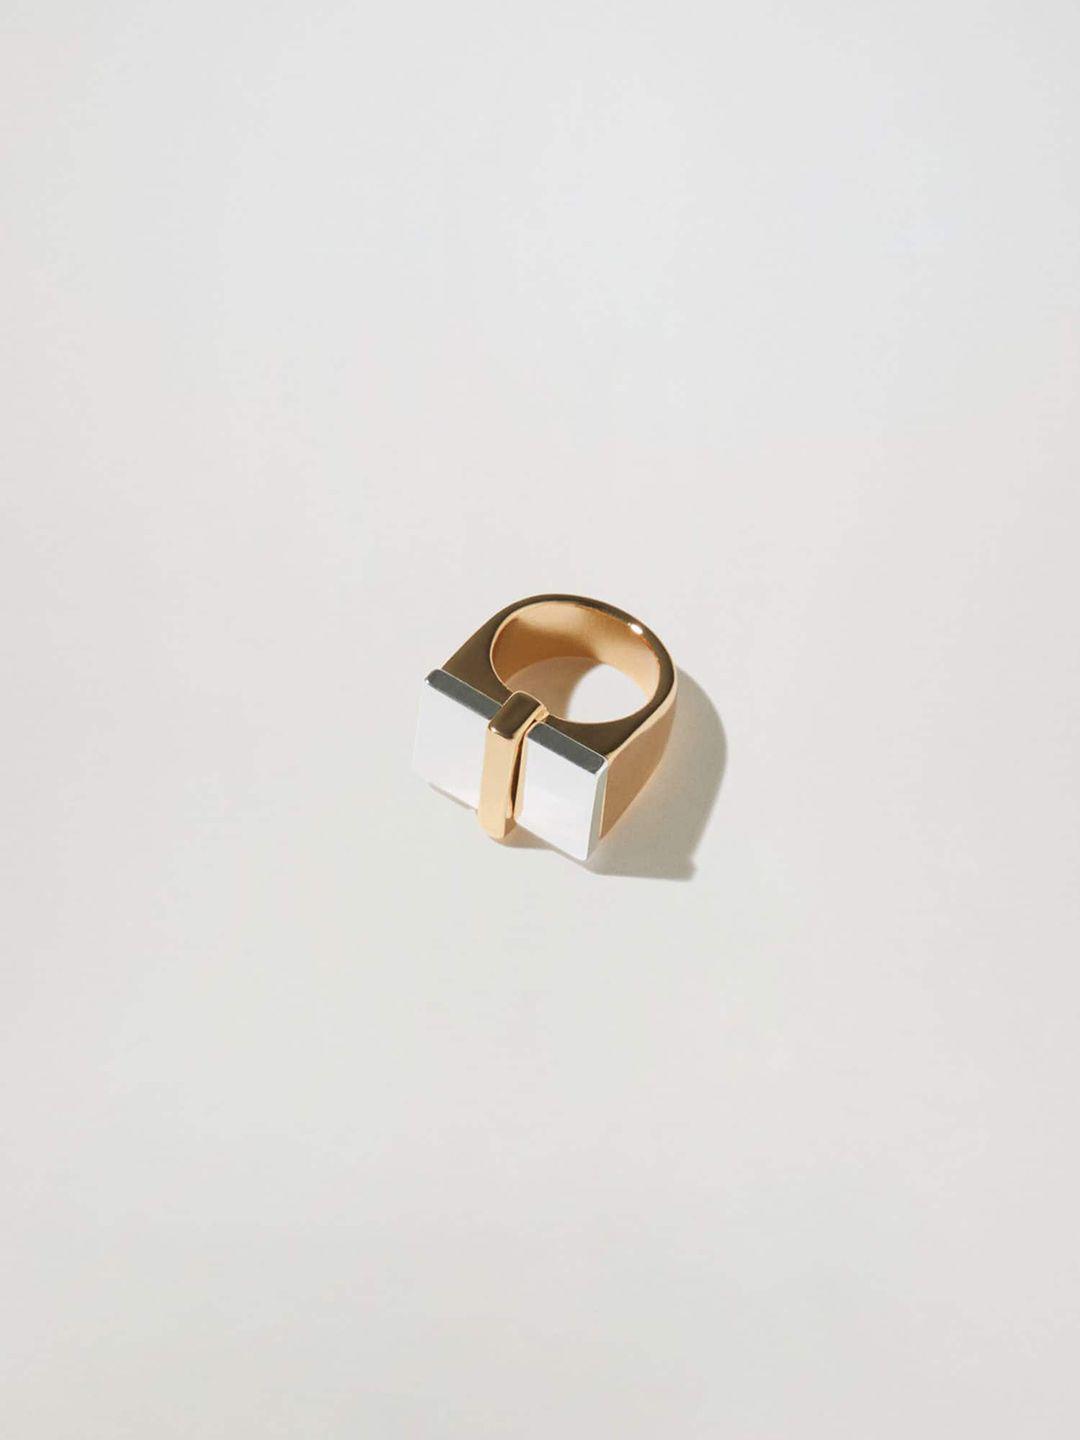 mango finger ring with square design